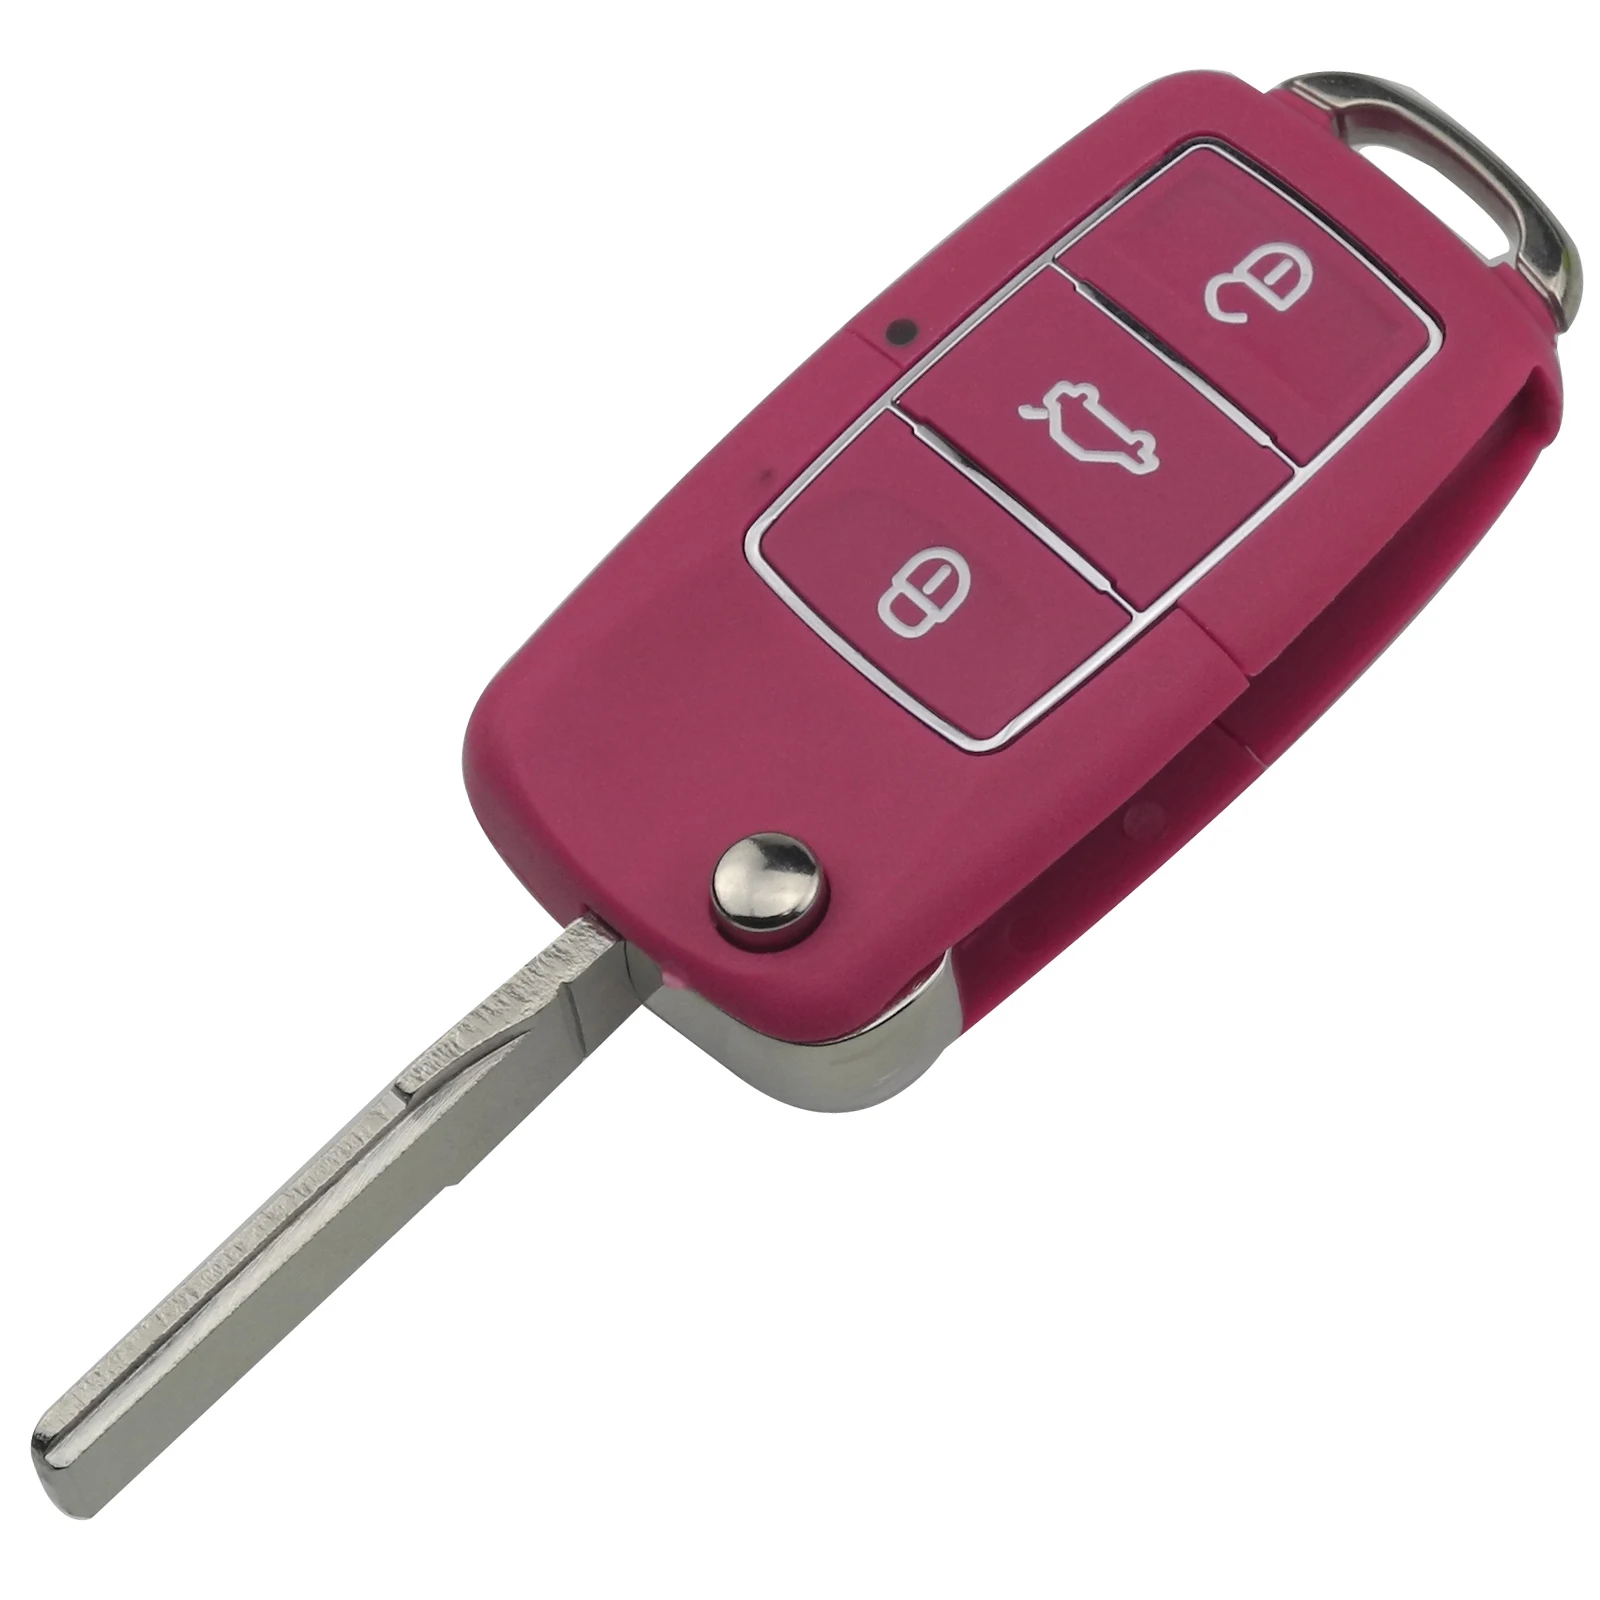 Jingyuqin откидной складной 3 кнопки дистанционного ключа автомобиля оболочки брелок чехол для Volkswagen VW Jetta Golf Passat Beetle Polo Bora - Цвет: purple